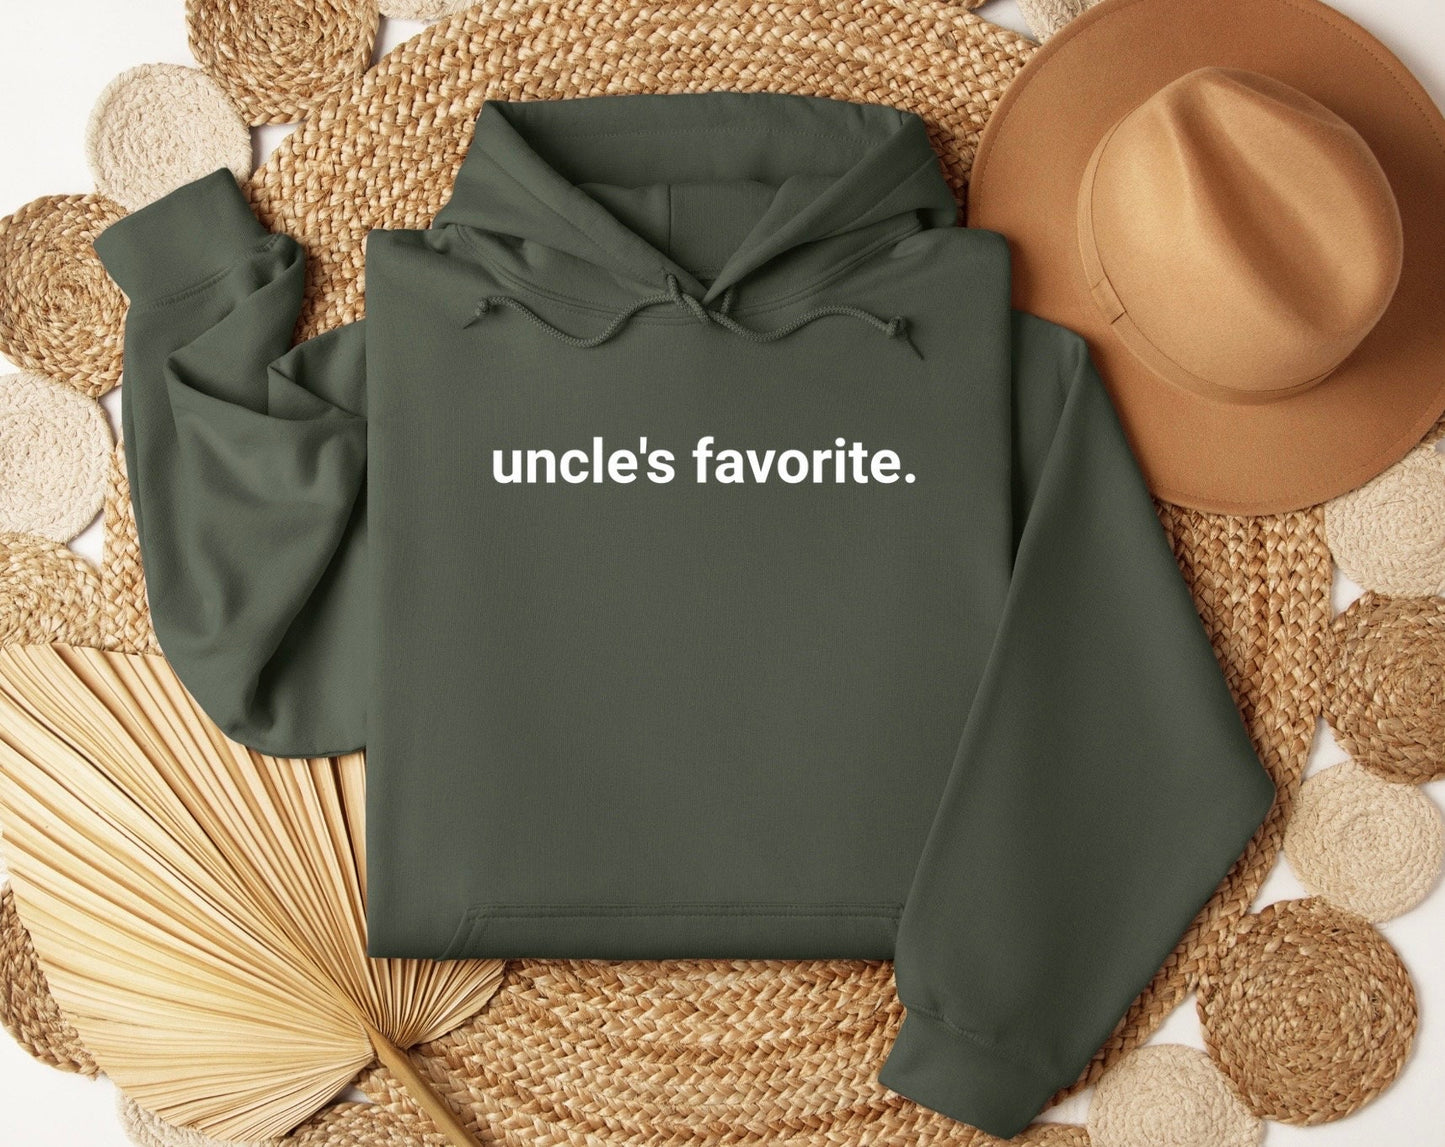 Uncles Favorite Sweatshirt, Uncles Favorite Shirt, Uncles Favorite Crewneck, Uncles Favorite Sweater, Oversized Sweater, Comfy Sweatshirt